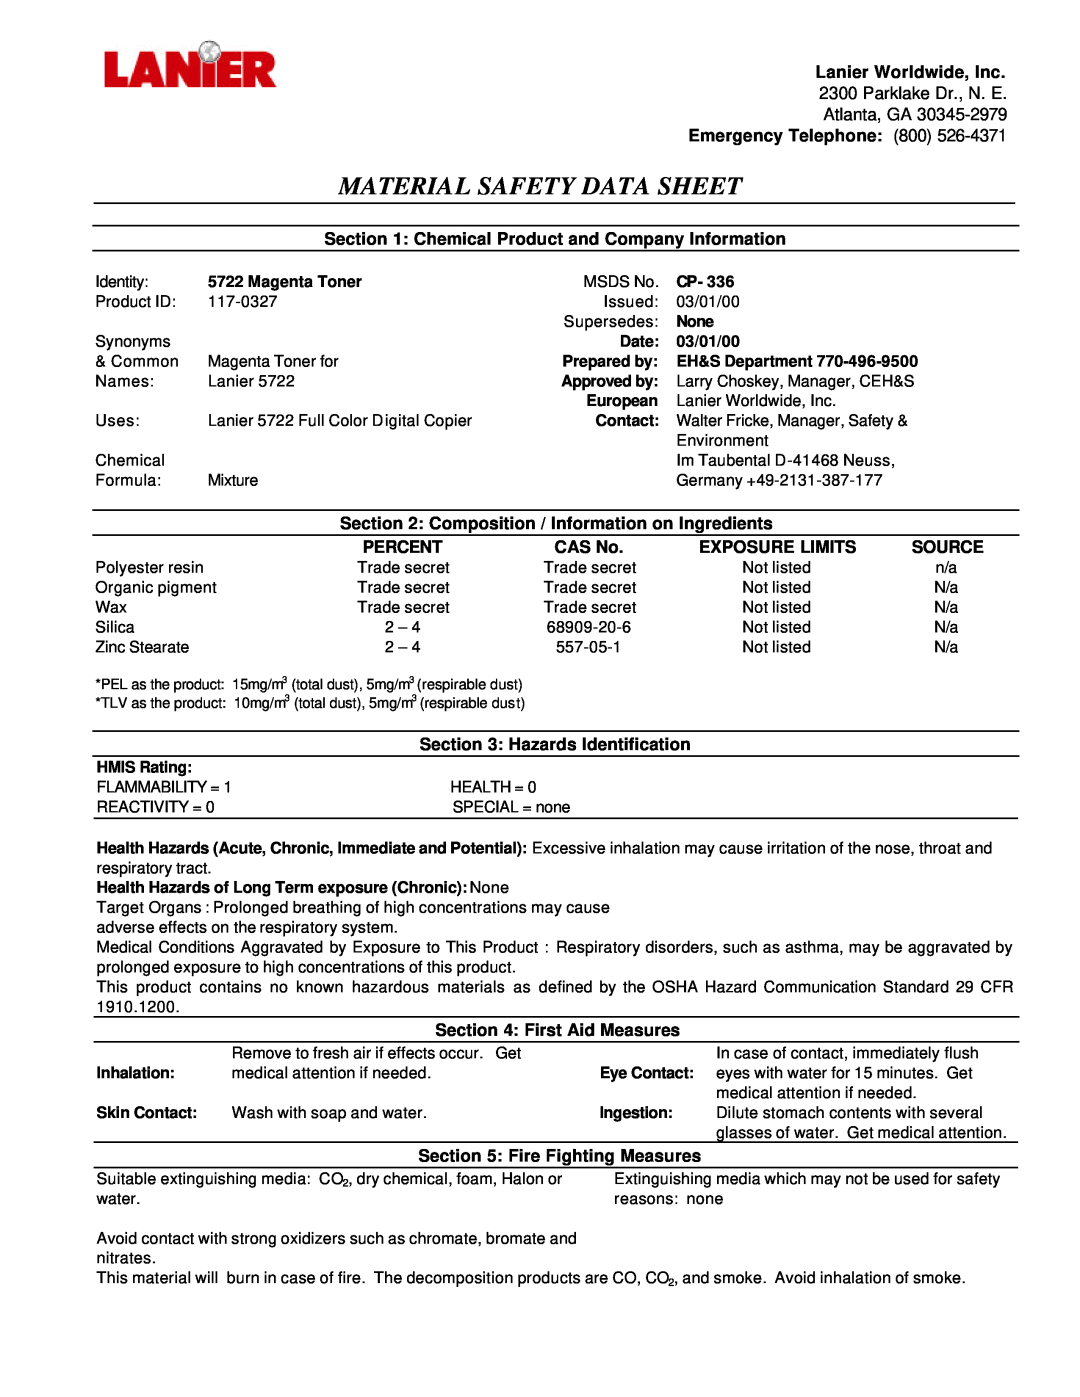 Lanier 5722 manual Material Safety Data Sheet 